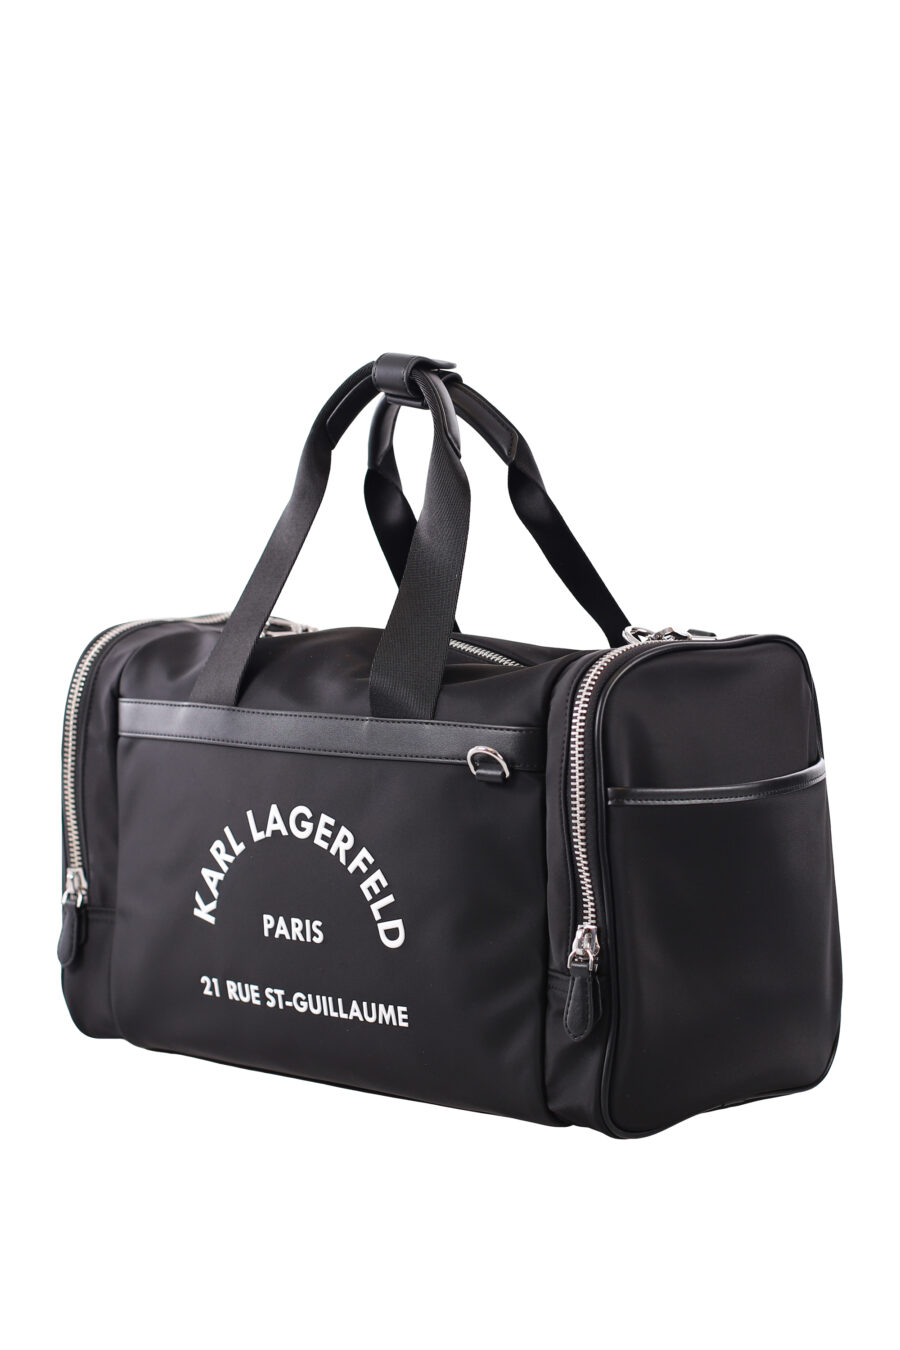 Black travel bag with "rue st-guillaume" logo - IMG 1633